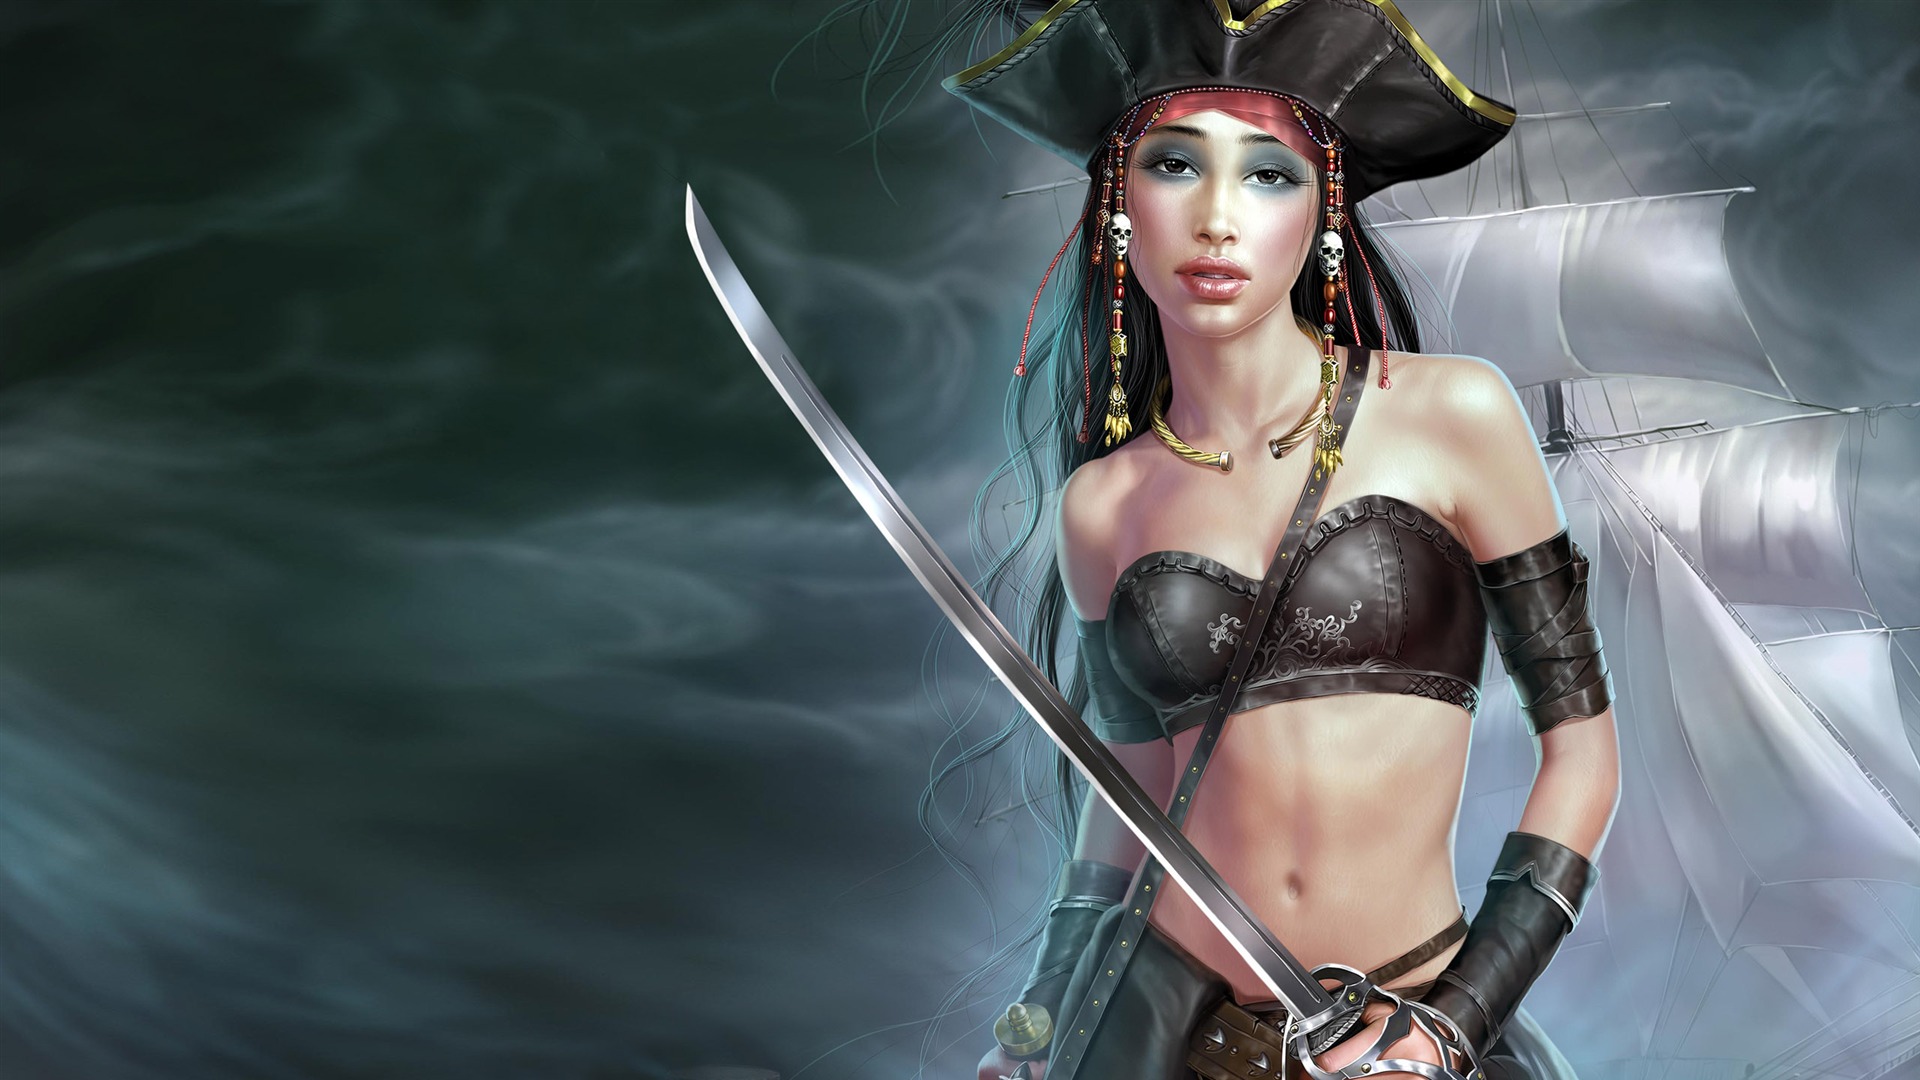 female pirate myth of aesthetic CG illustration wallpaper